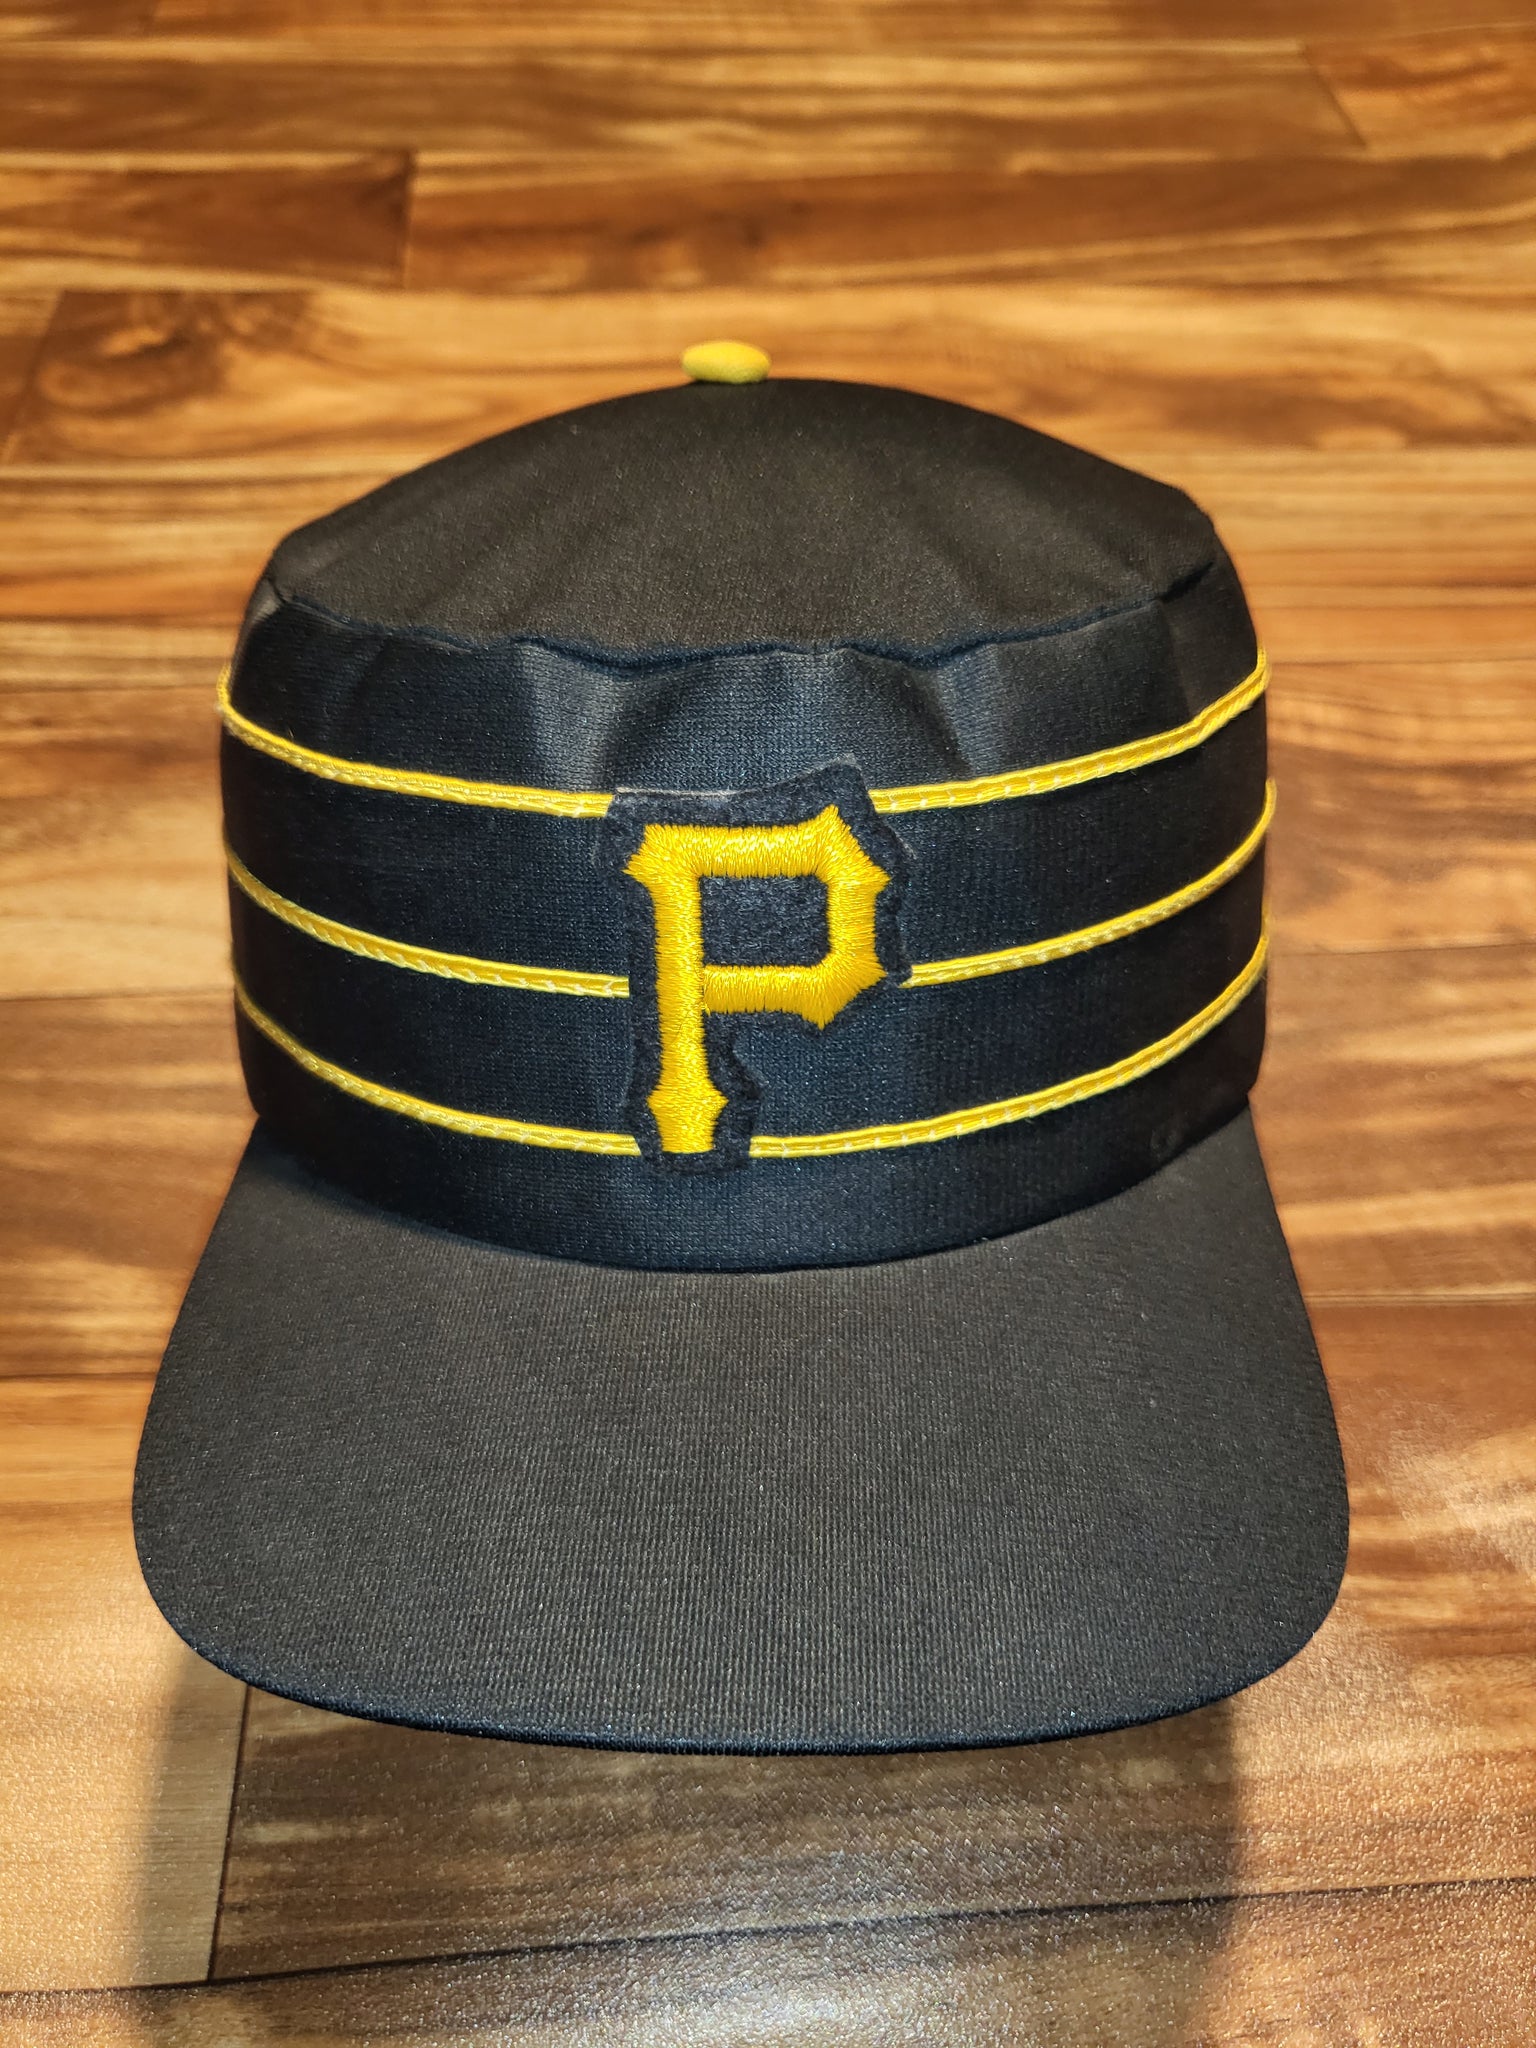 Pittsburgh Pirates Throwback Jerseys, Vintage MLB Gear